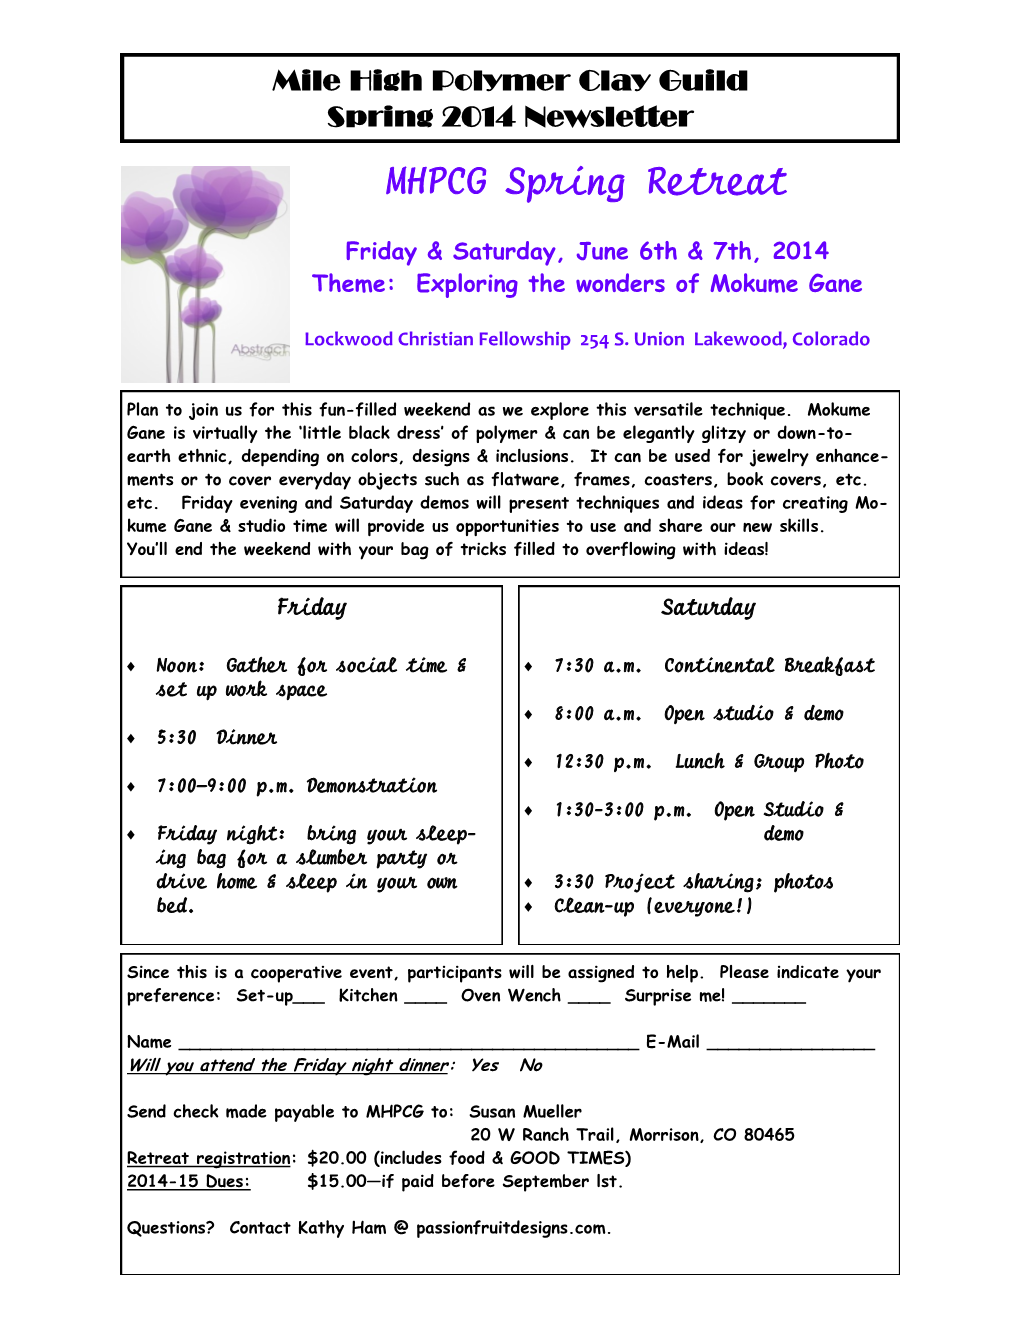 MHPCG Spring Retreat